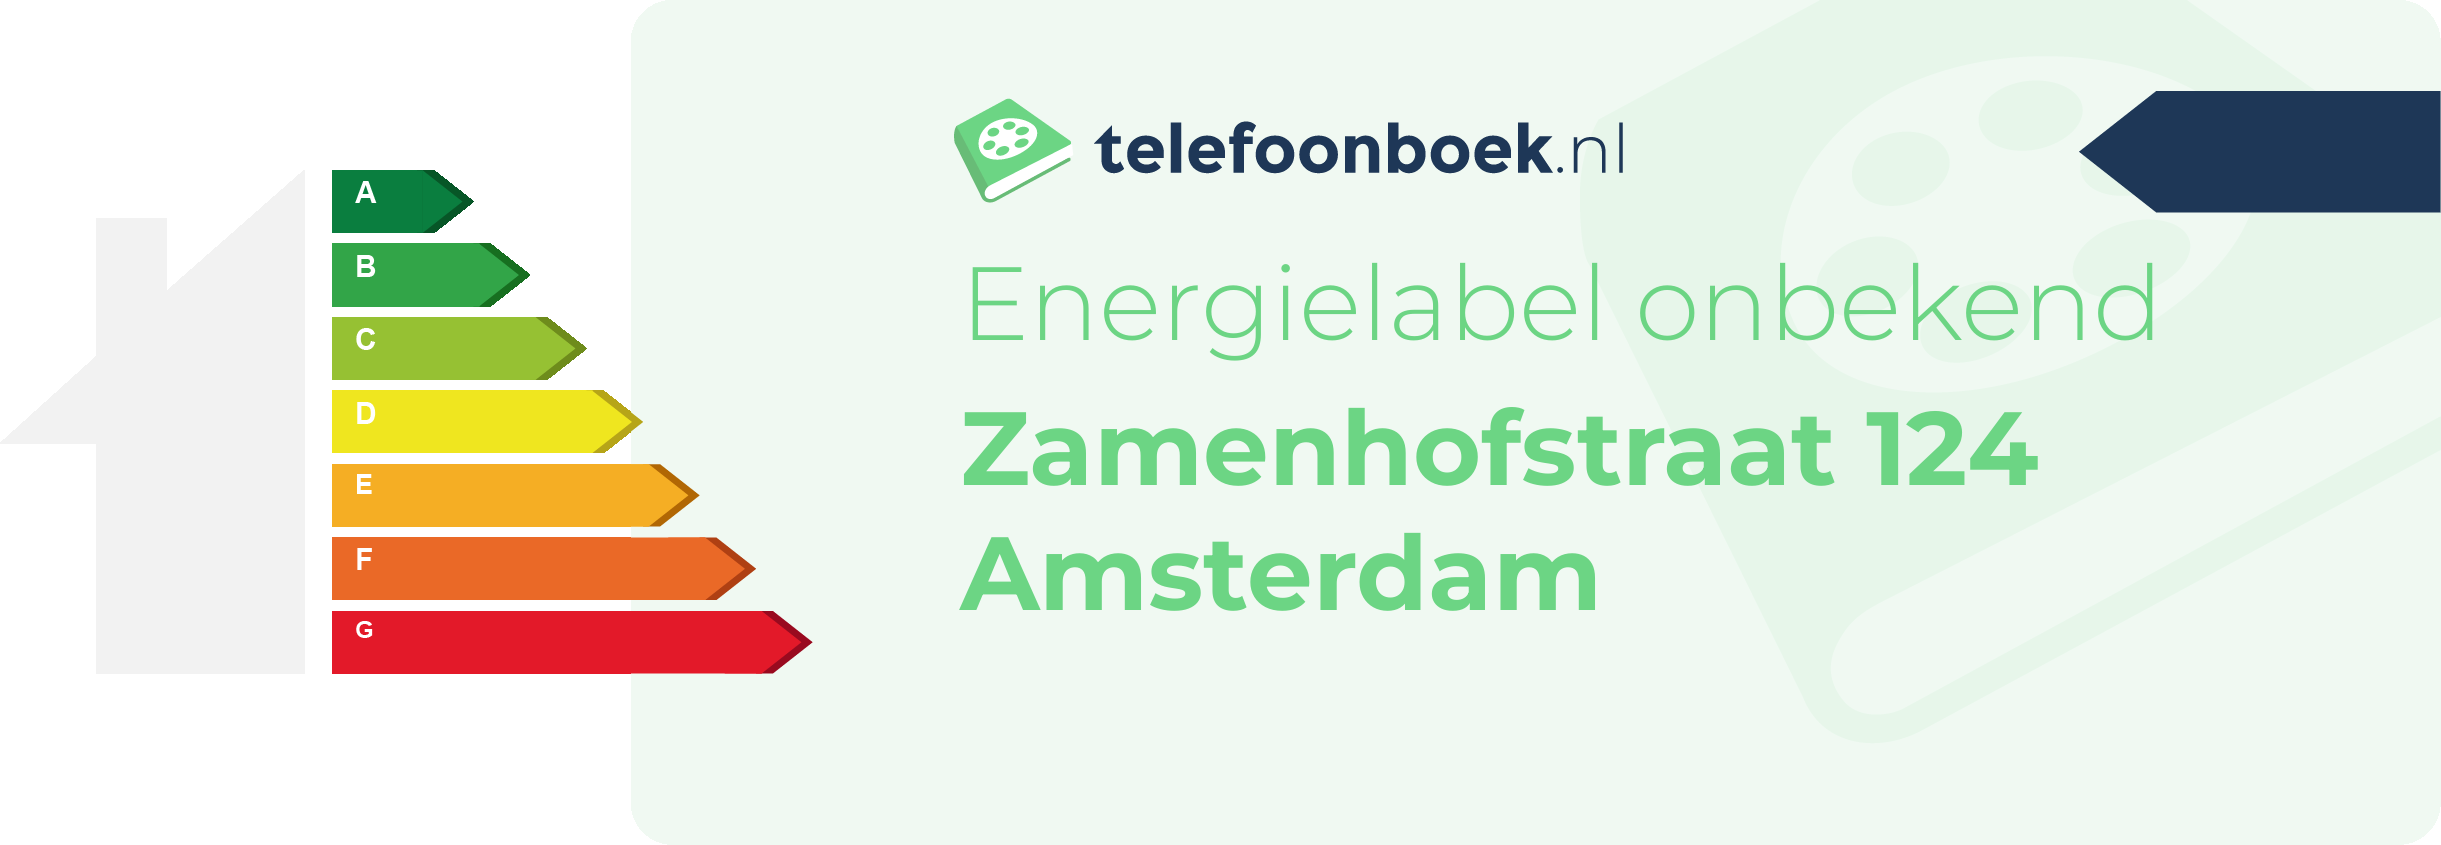 Energielabel Zamenhofstraat 124 Amsterdam